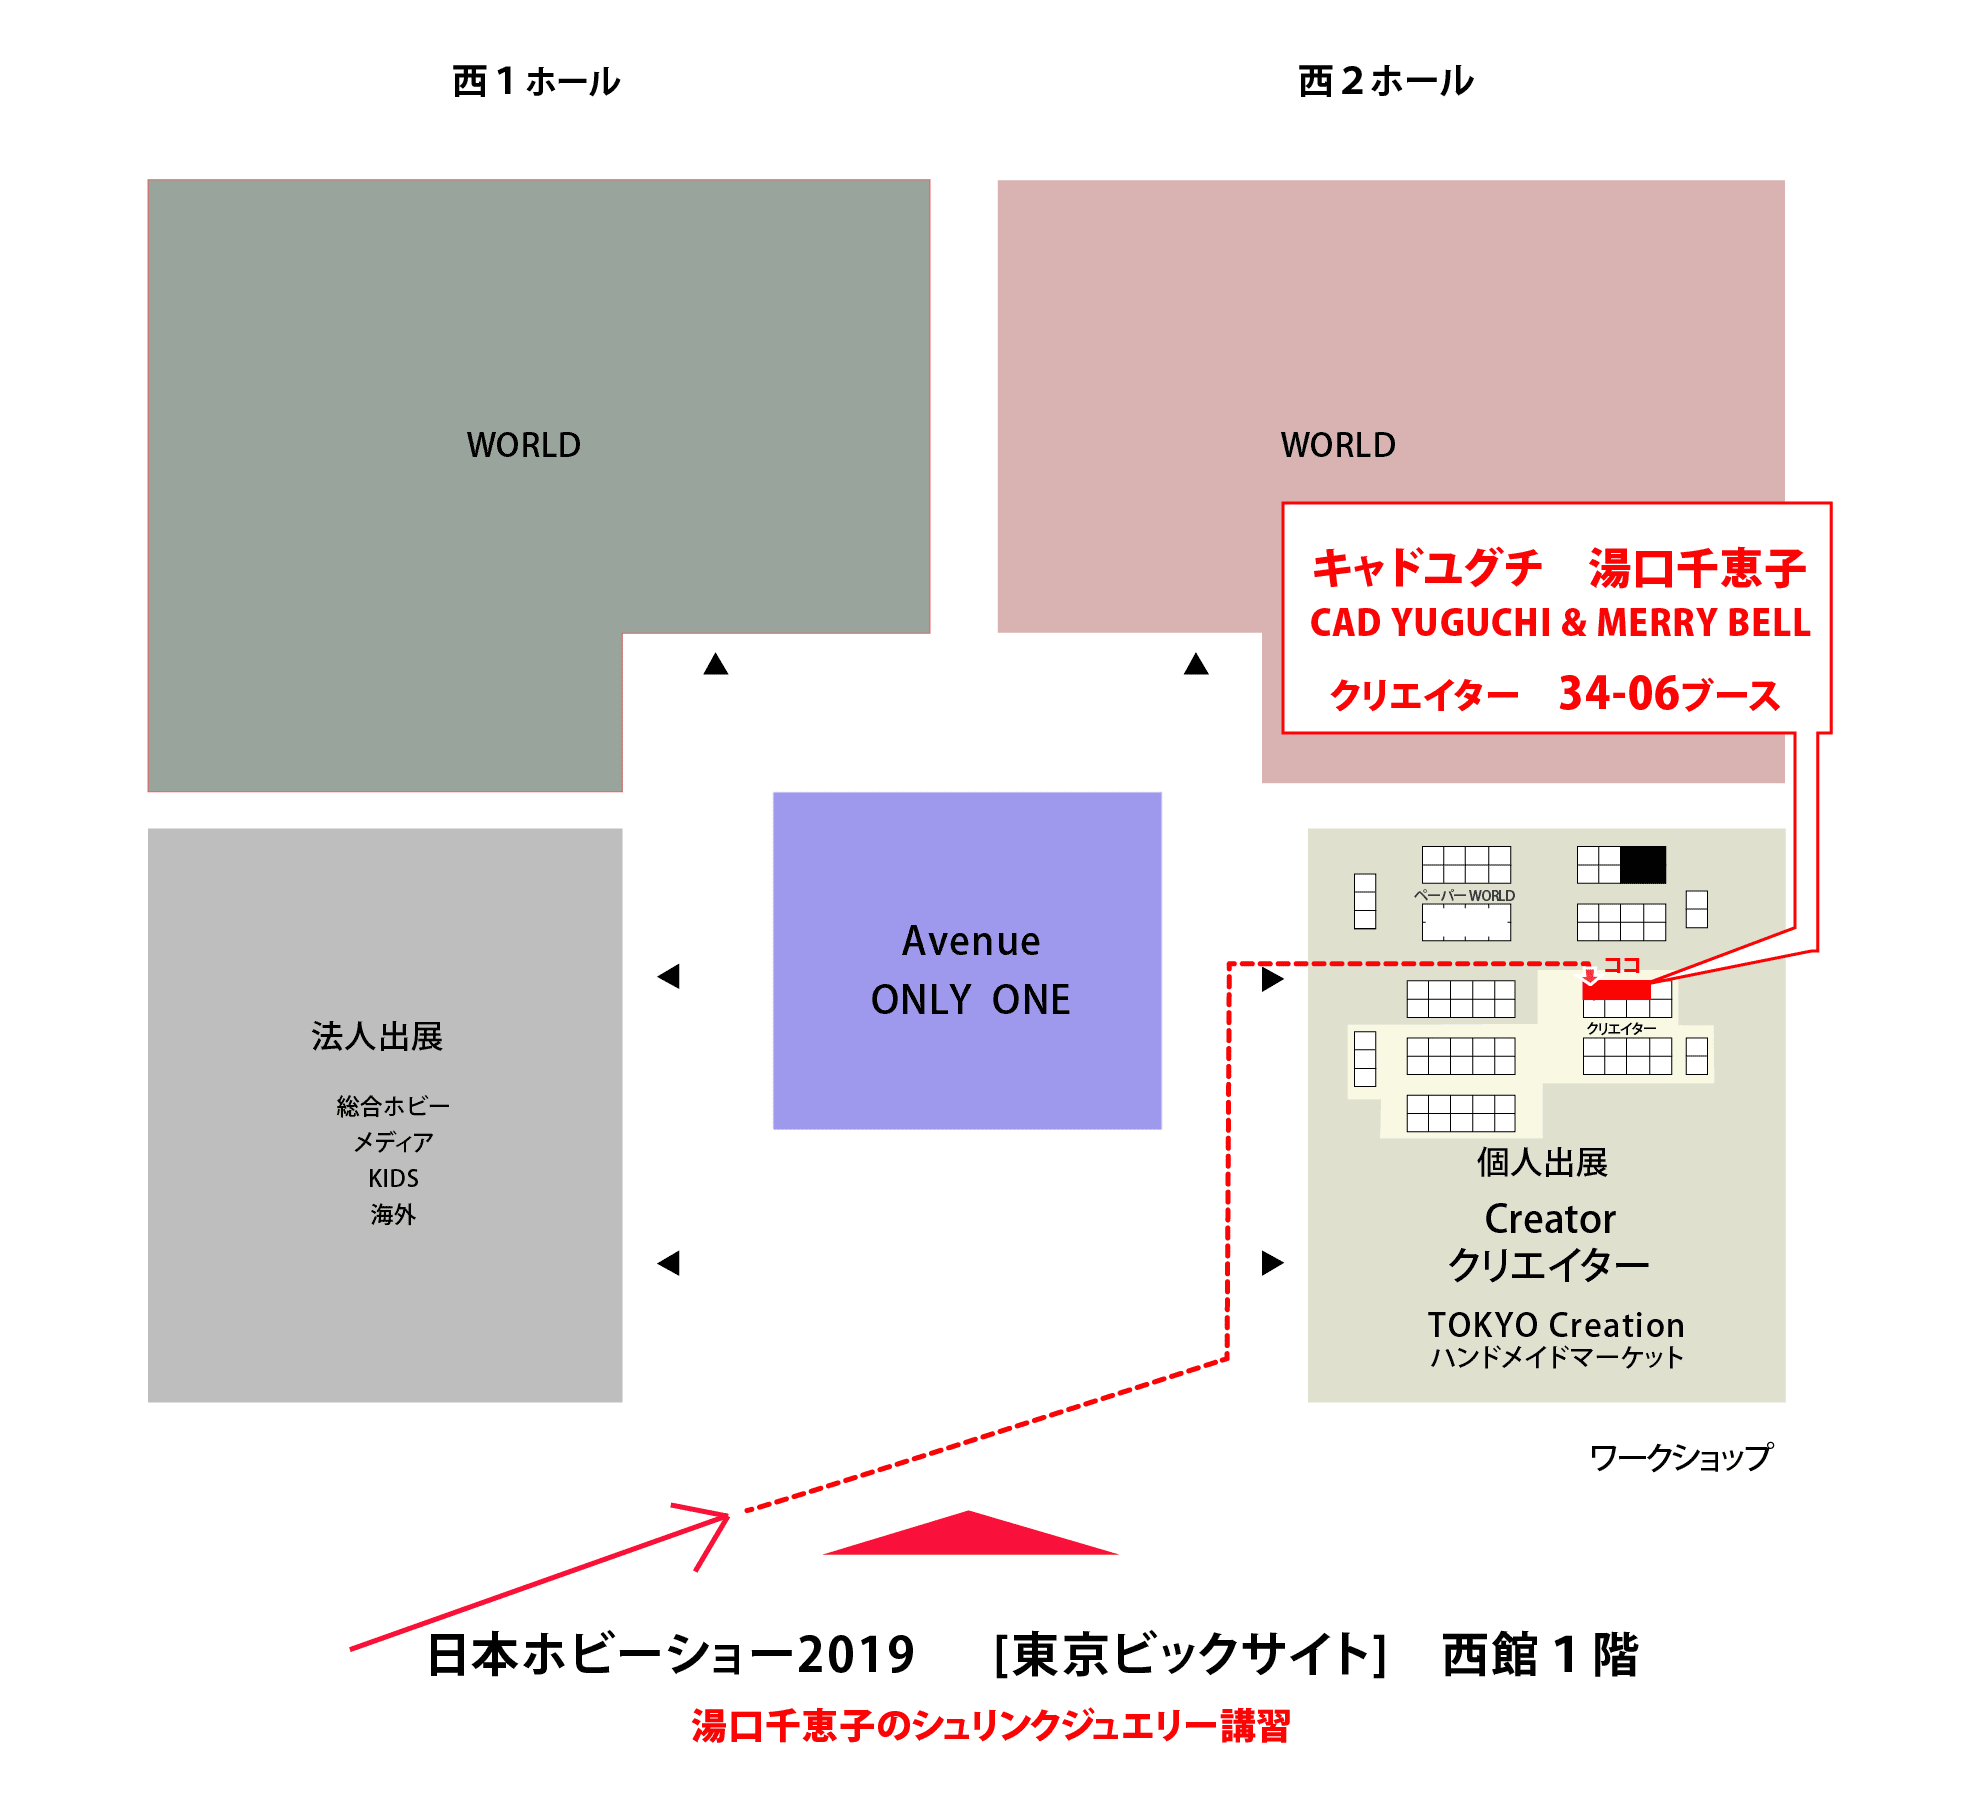 THE 43ed JAPAN HOBBY SHOW 2019*Chieko Yuguchi's Shrink Plastic*Tokyo Big Sight East Hall*CAD YUGUCHI*Booth No.34-06